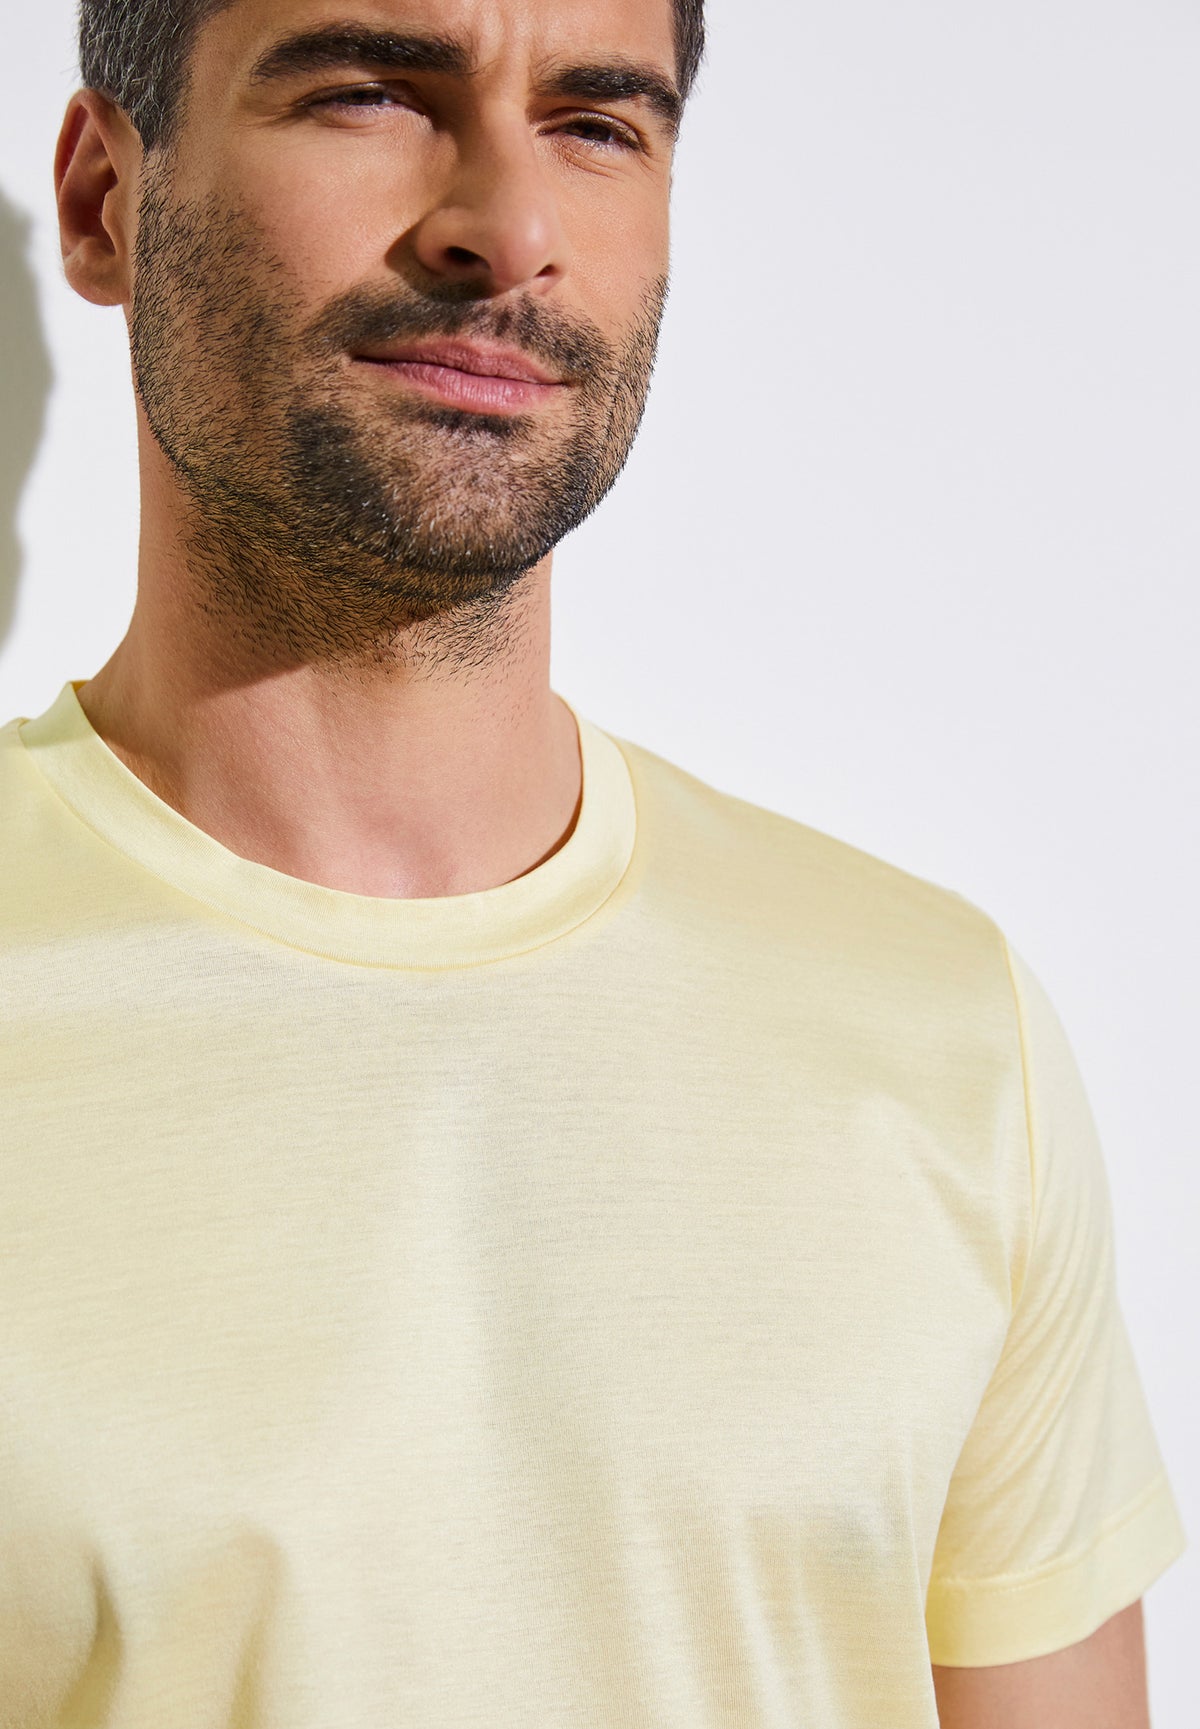 Filodiscozia | T-Shirt Short Sleeve - yellow